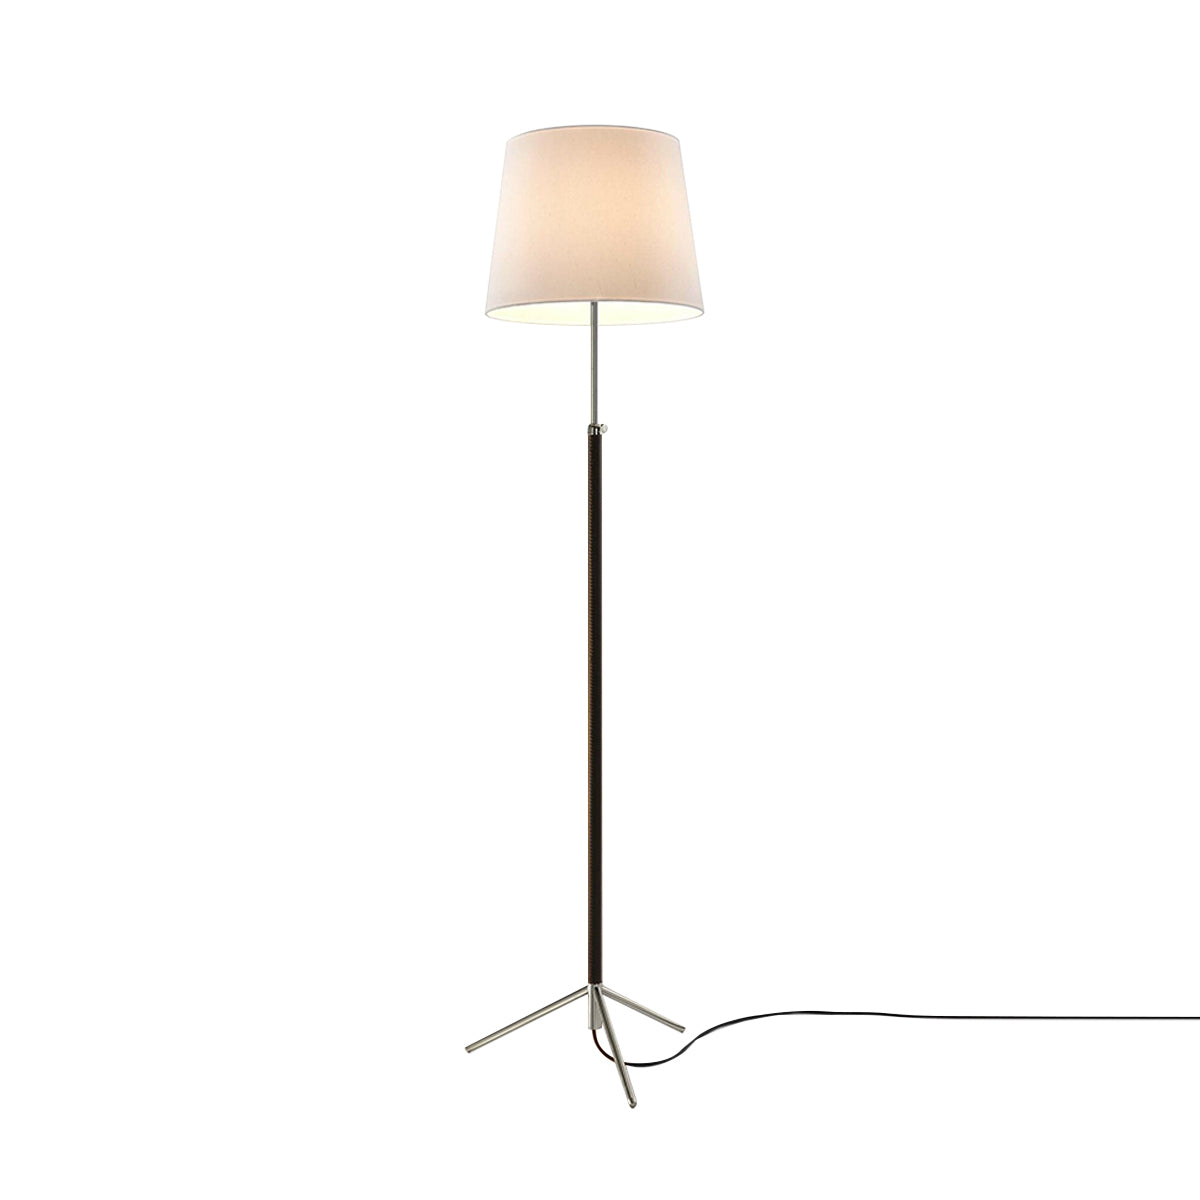 Pie de Salón Floor Lamp: G3 + Chrome-Plated + White Linen